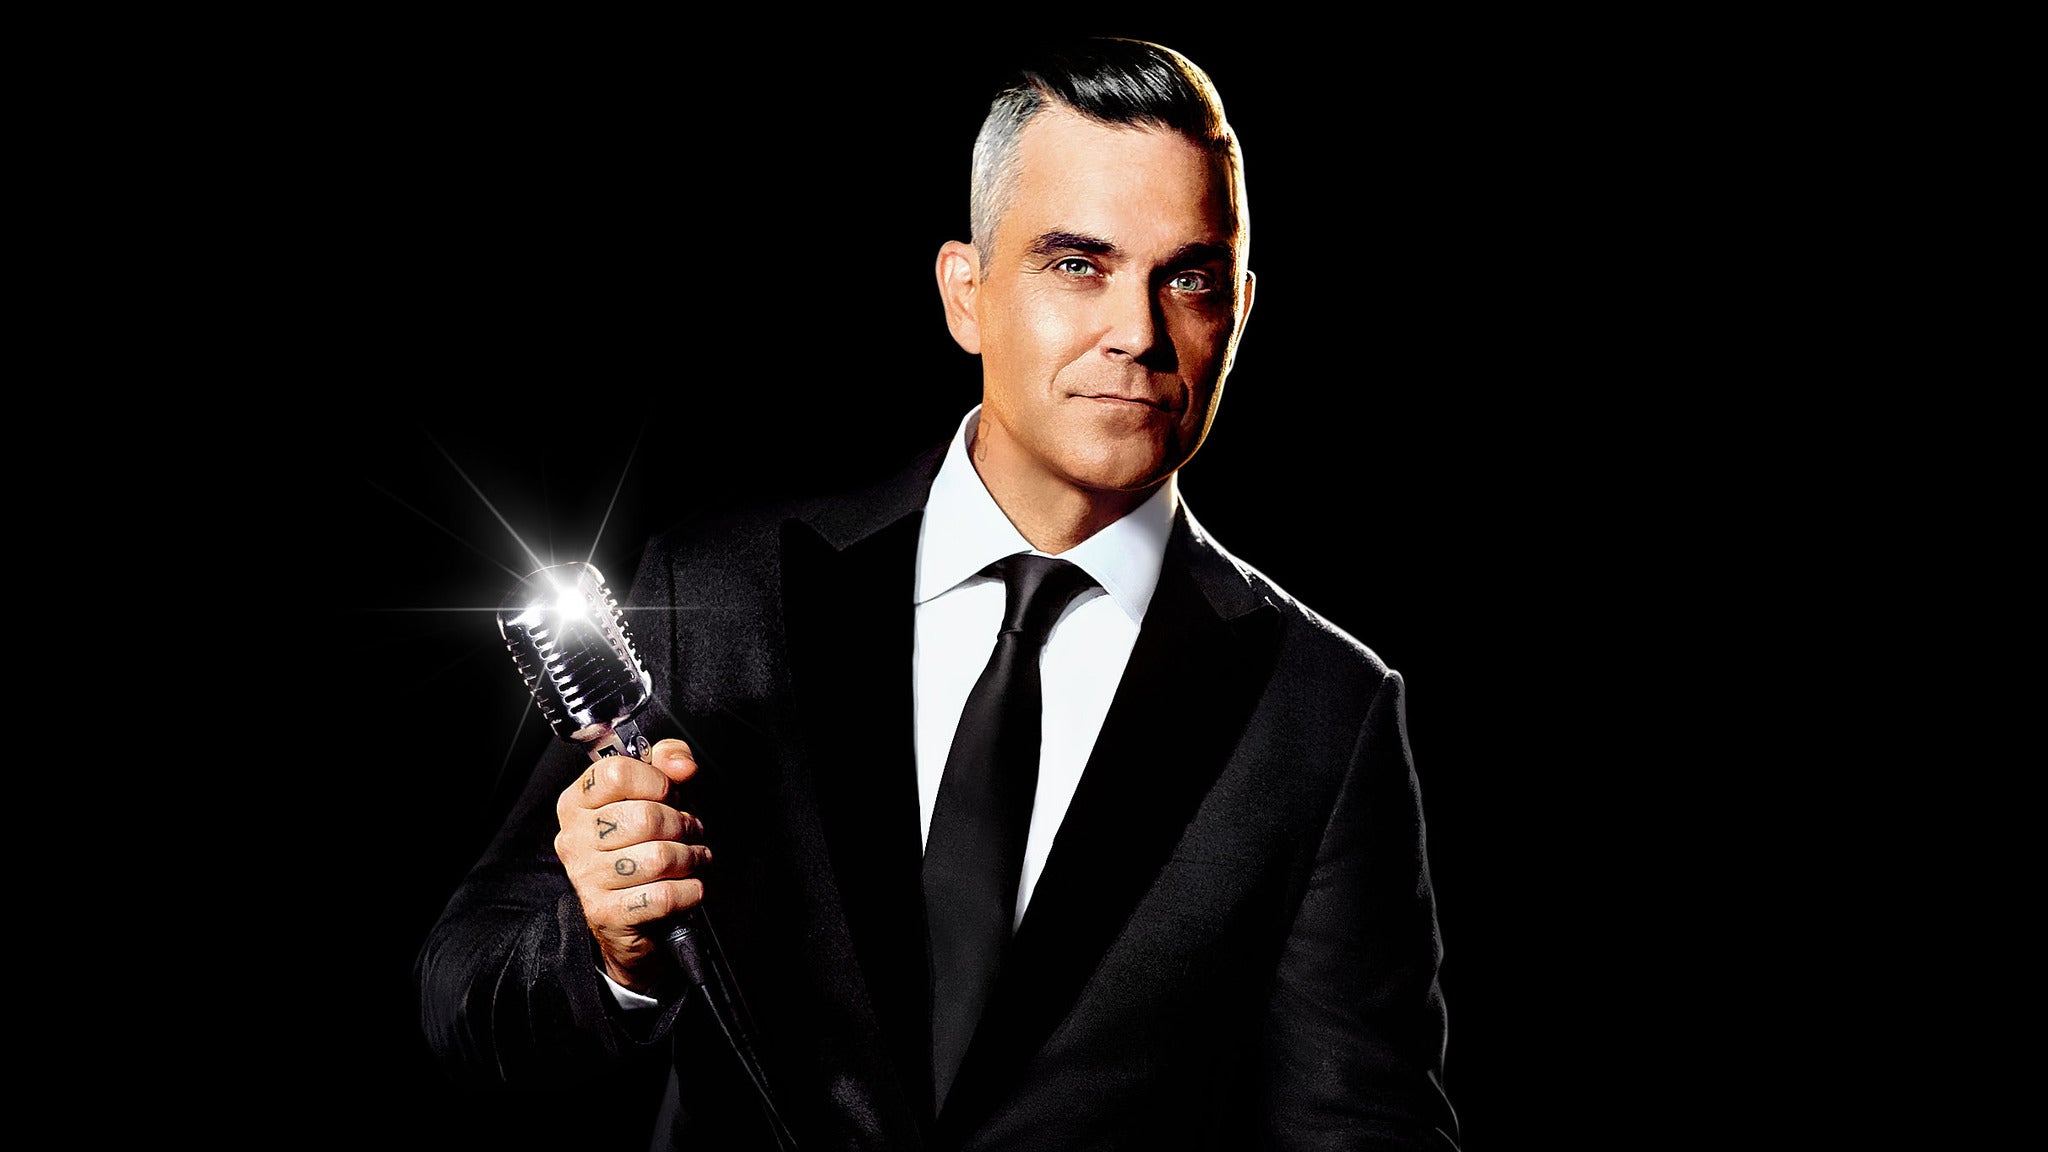 Robbie Williams Live in Las Vegas in Las Vegas promo photo for Official Platinum presale offer code